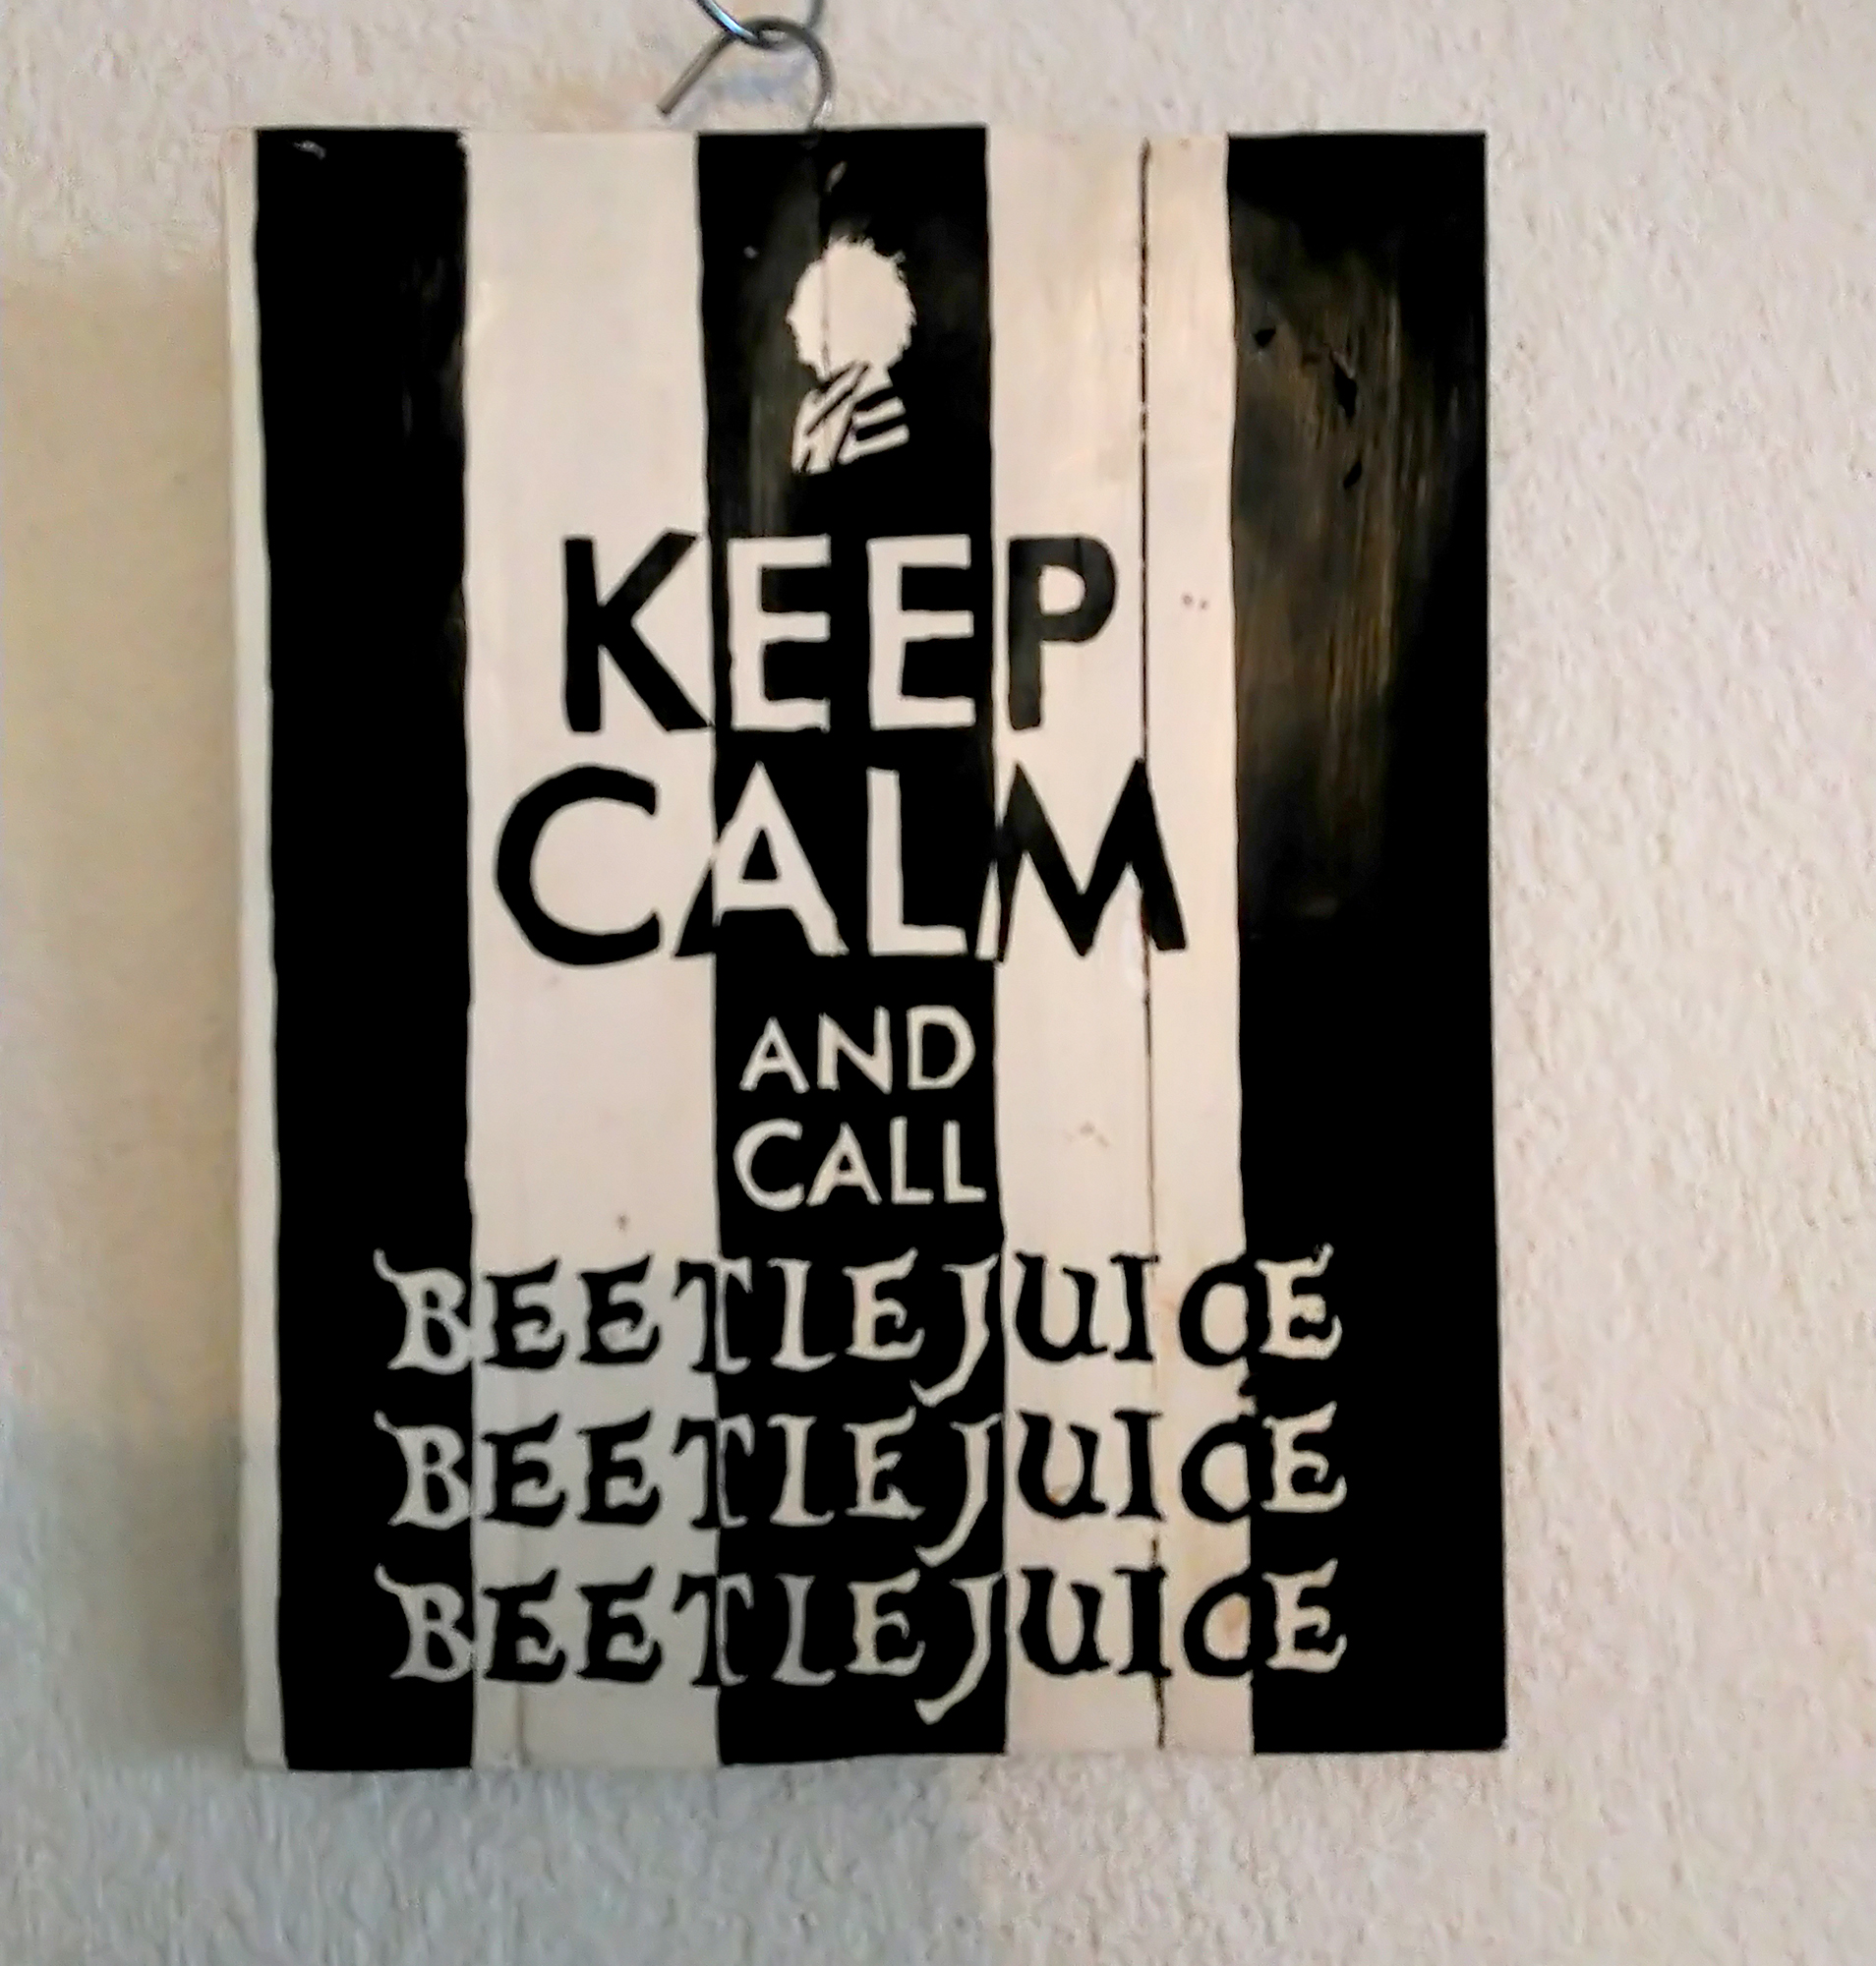 Cuadro Beetlejuice Keep calm and call